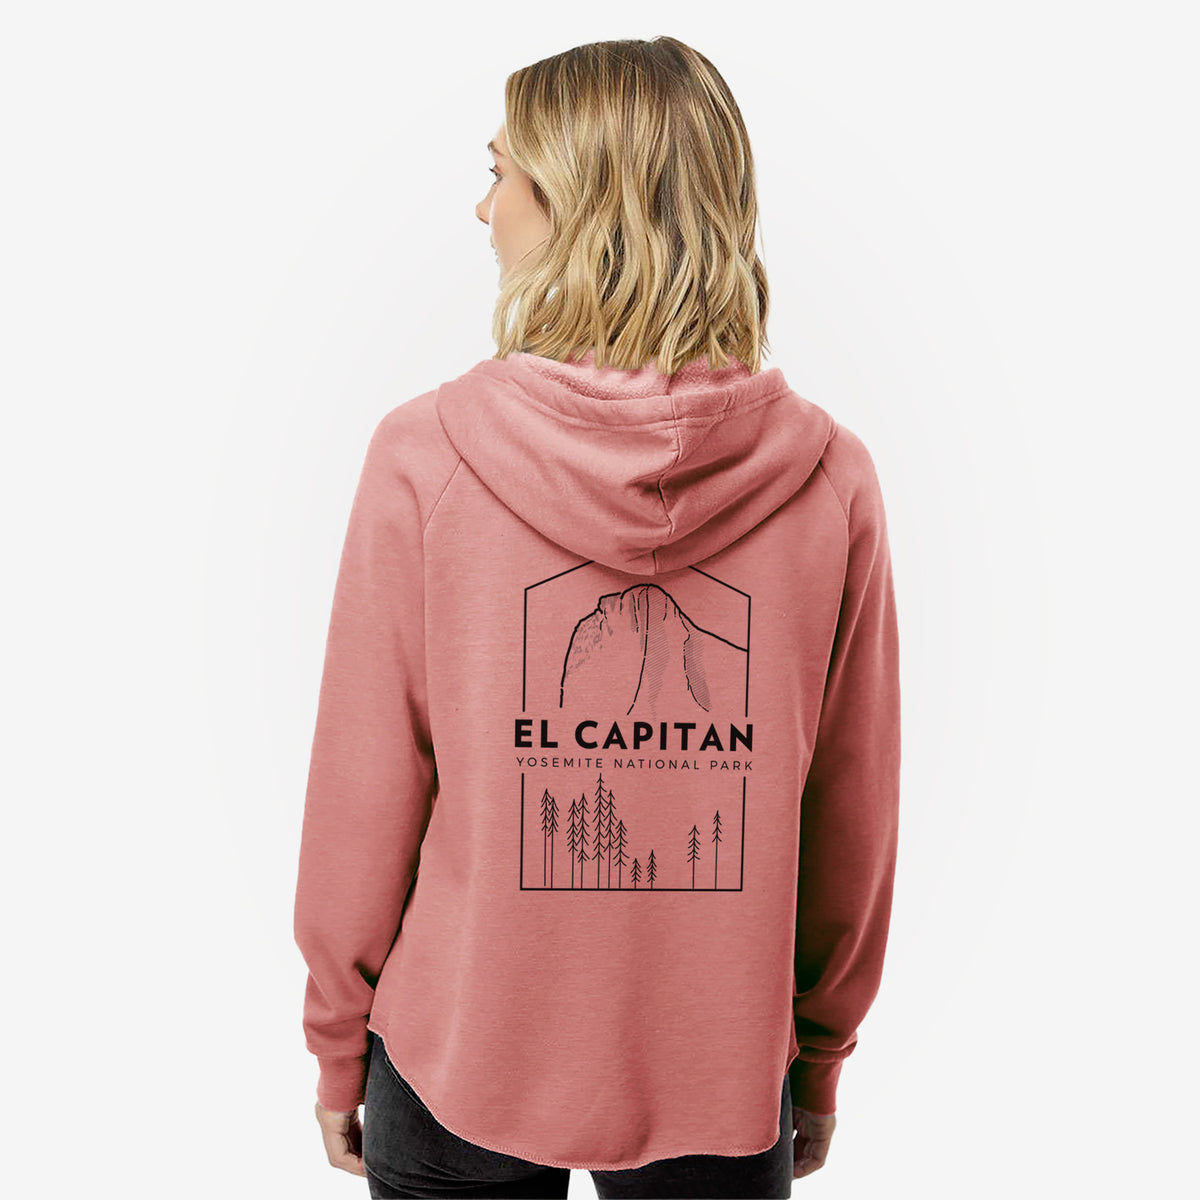 El Capitan - Yosemite National Park - Women&#39;s Cali Wave Zip-Up Sweatshirt